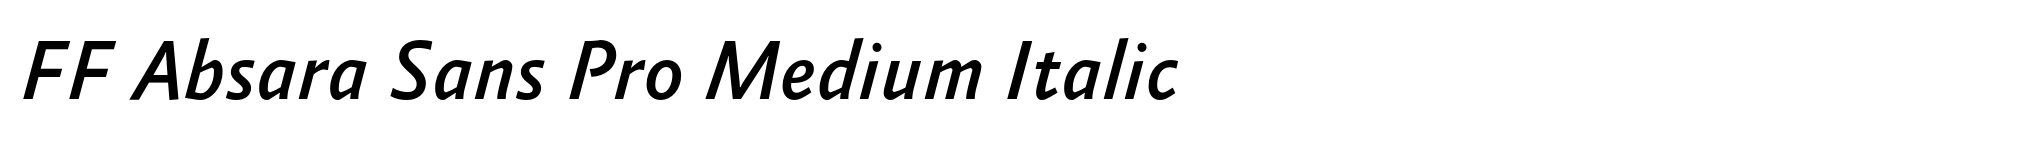 FF Absara Sans Pro Medium Italic image